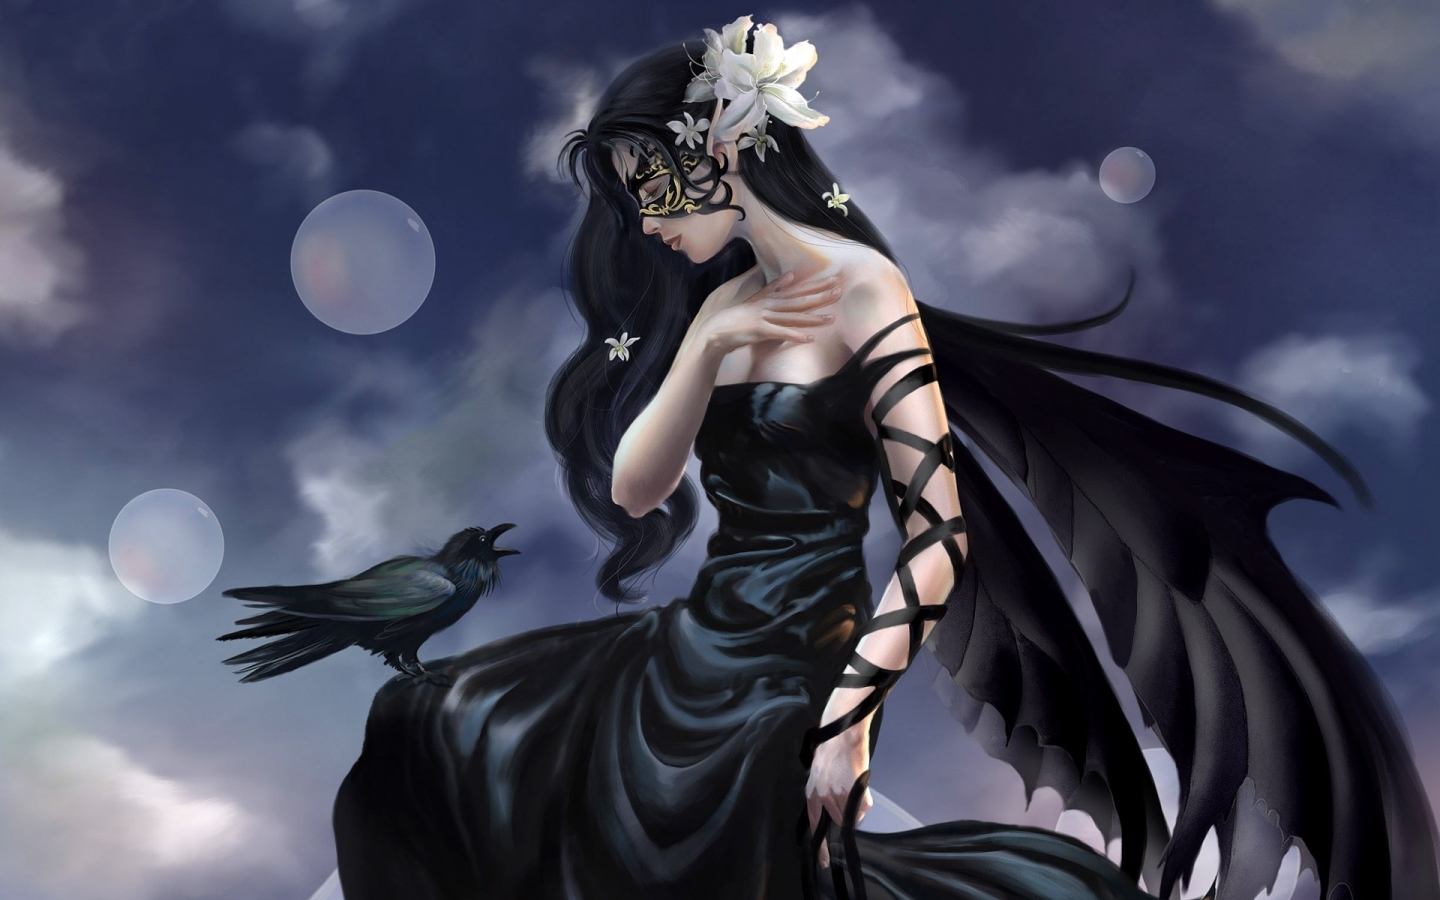 Fantasy Girl Raven for 1440 x 900 widescreen resolution